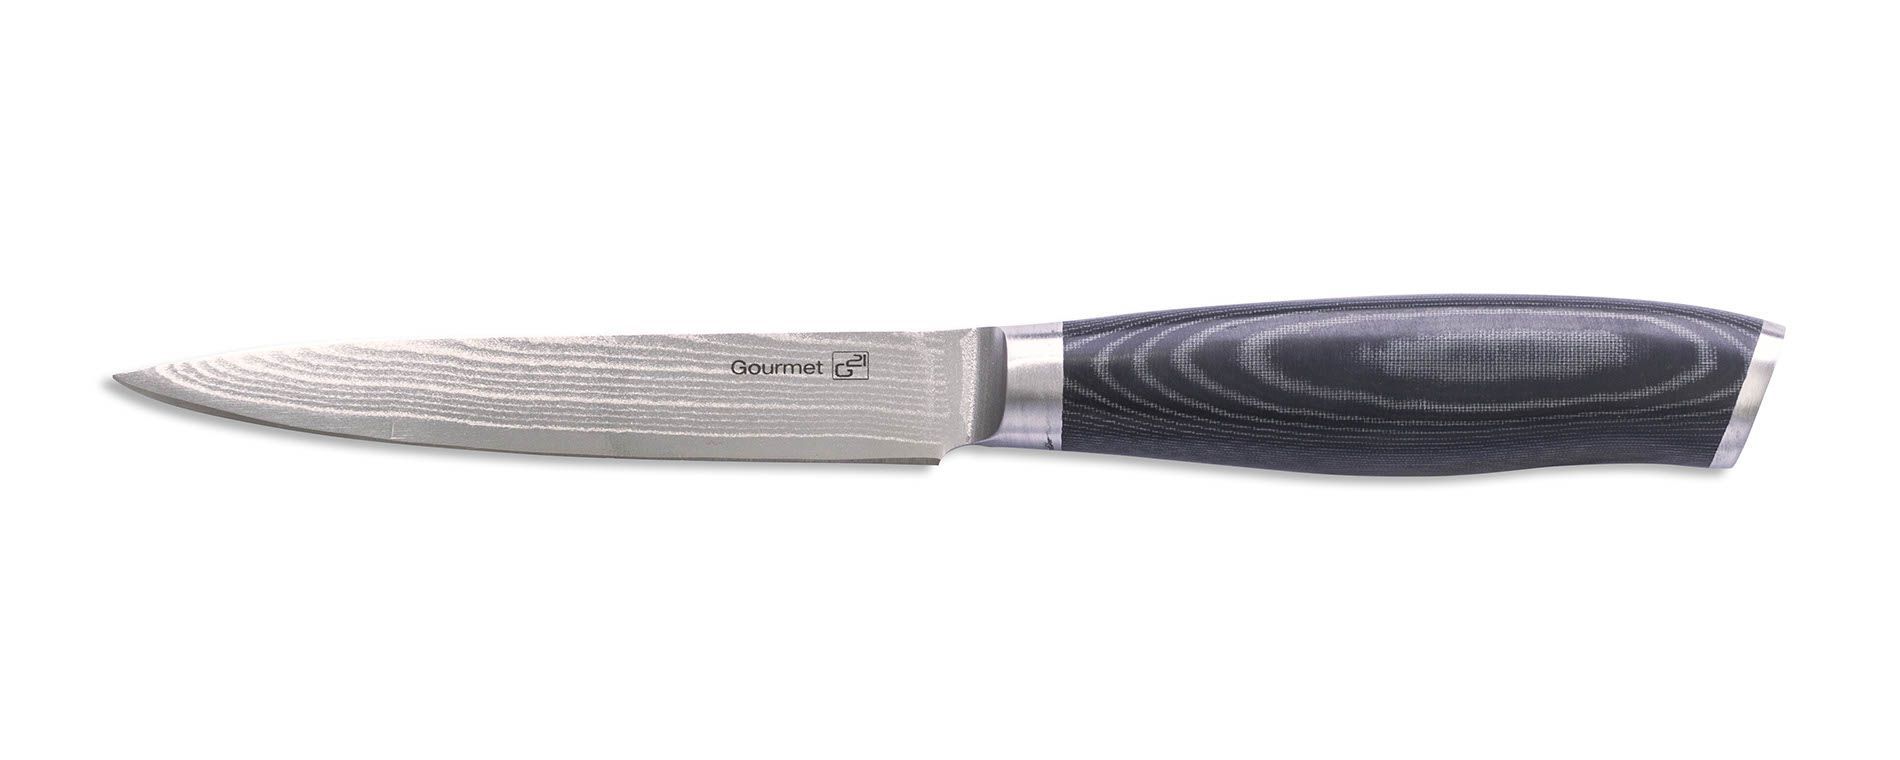 G21 Gourmet Damascus Kuchyňský nůž - 13 cm - alza.cz